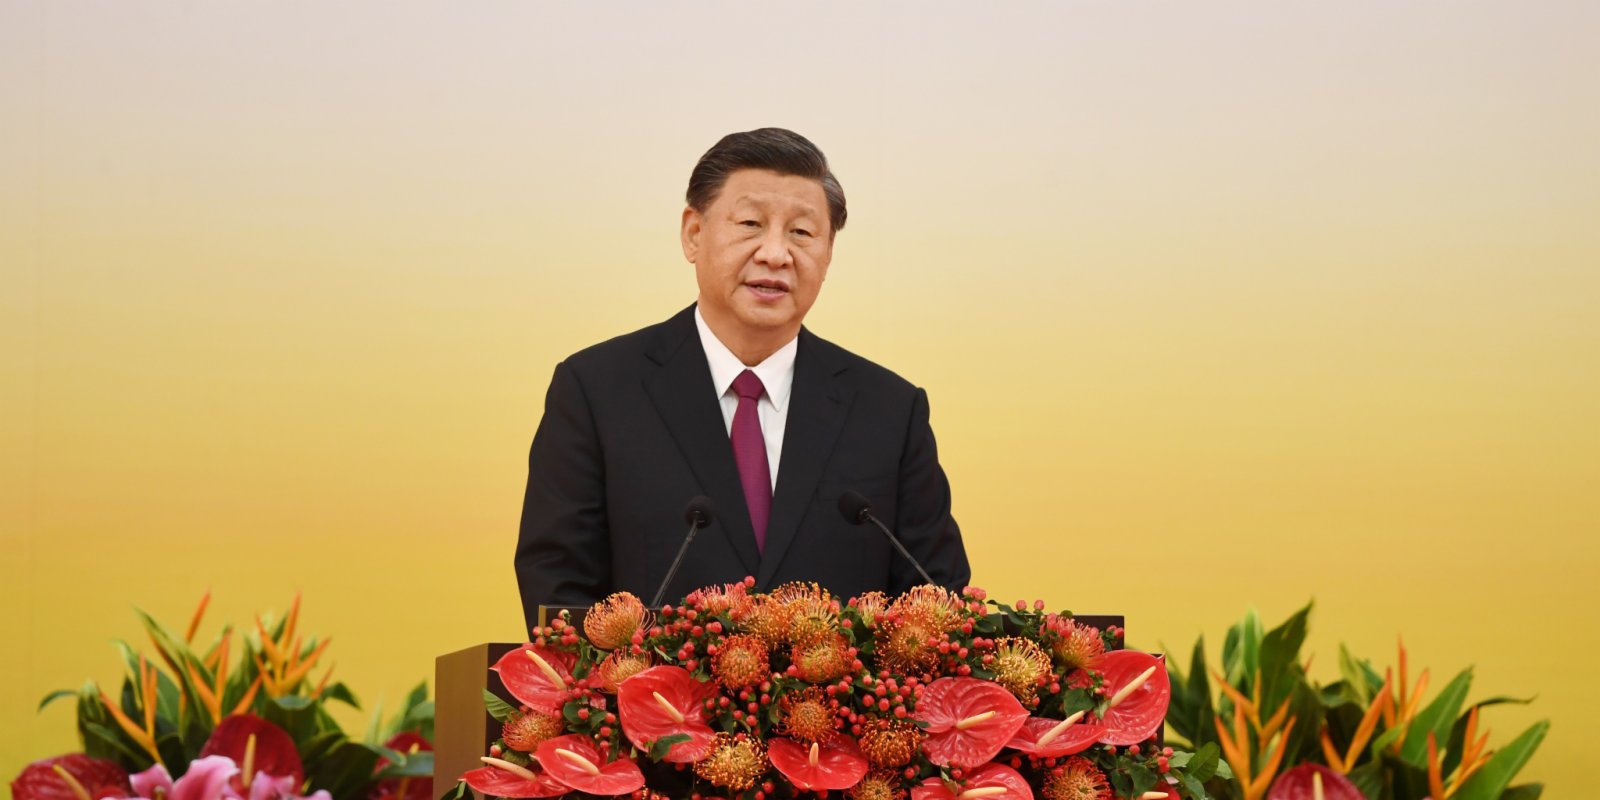 HK should keep strengthening momentum of development: Xi